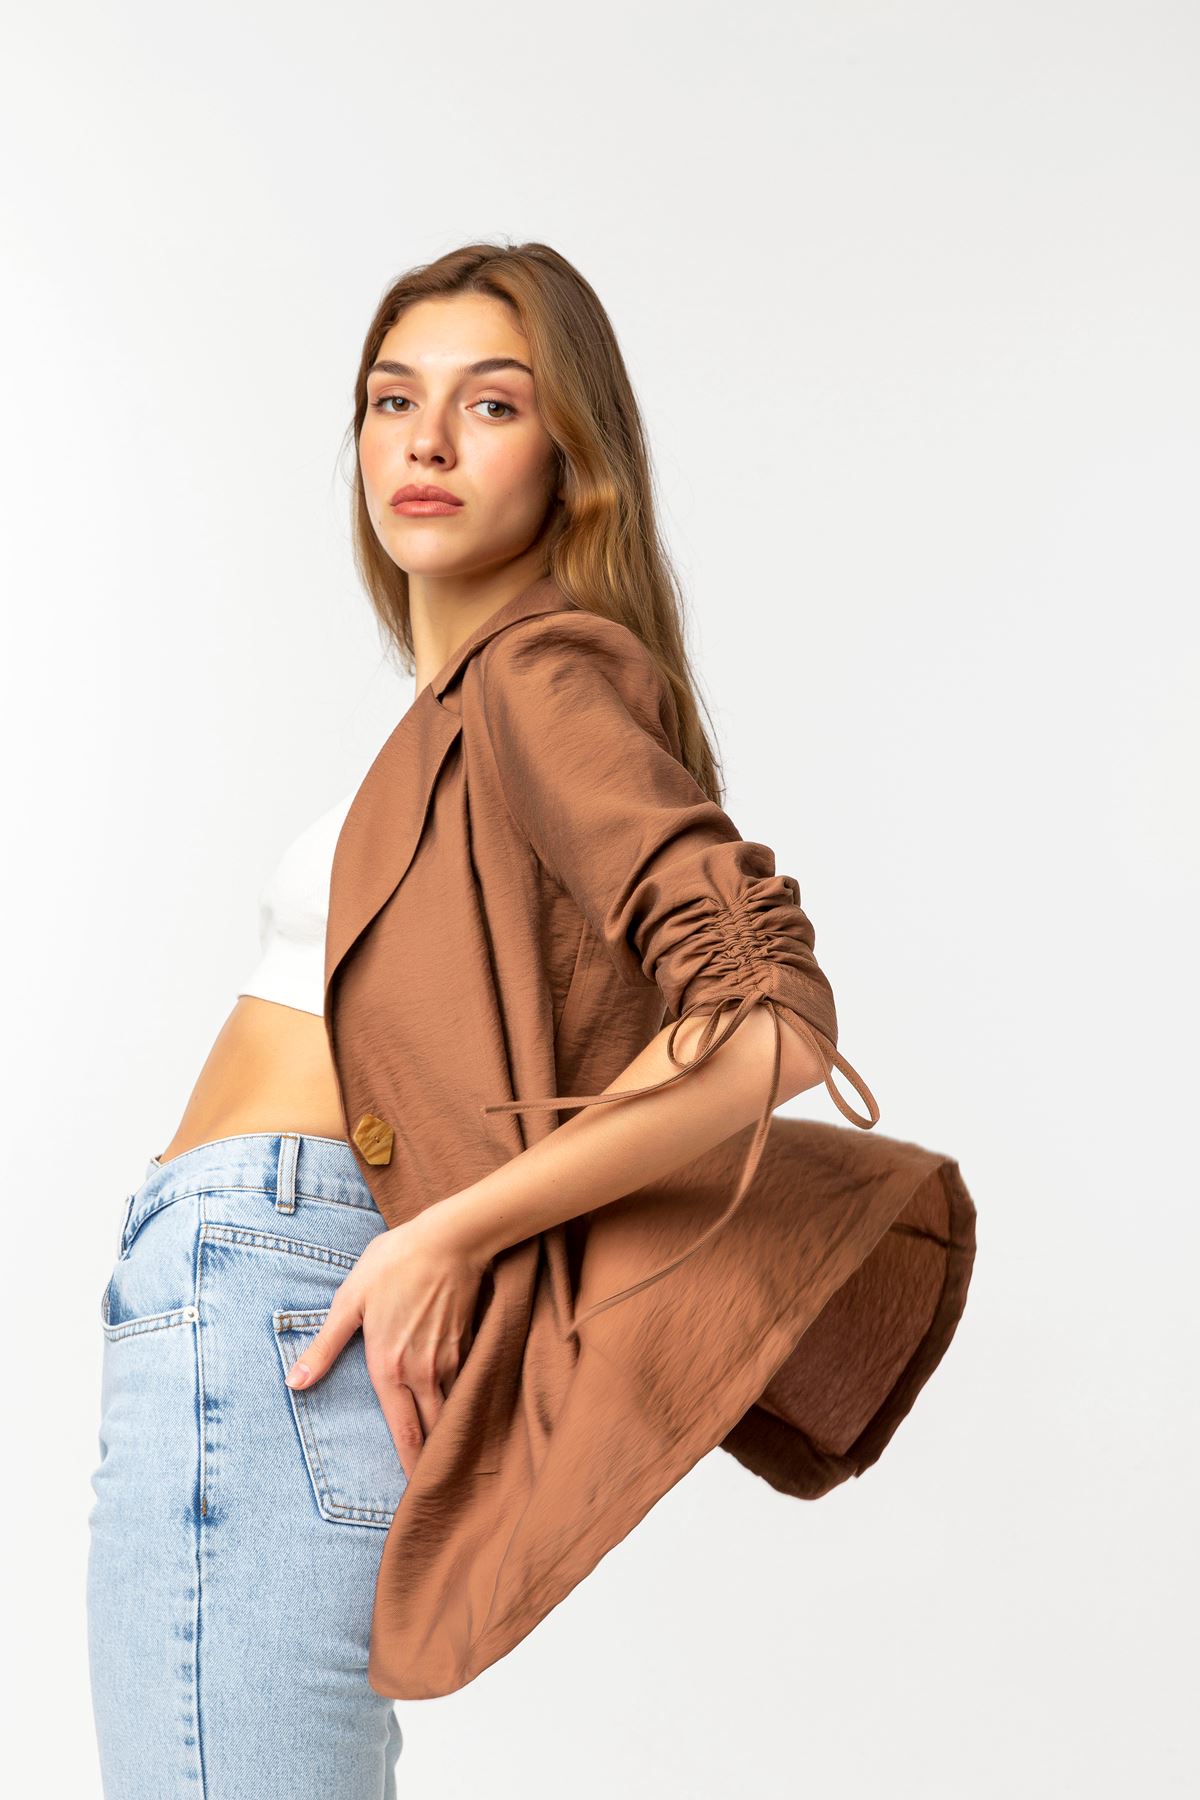 Aerobin Fabric Revere Collar Hip Height Comfy Women Jacket - Brown